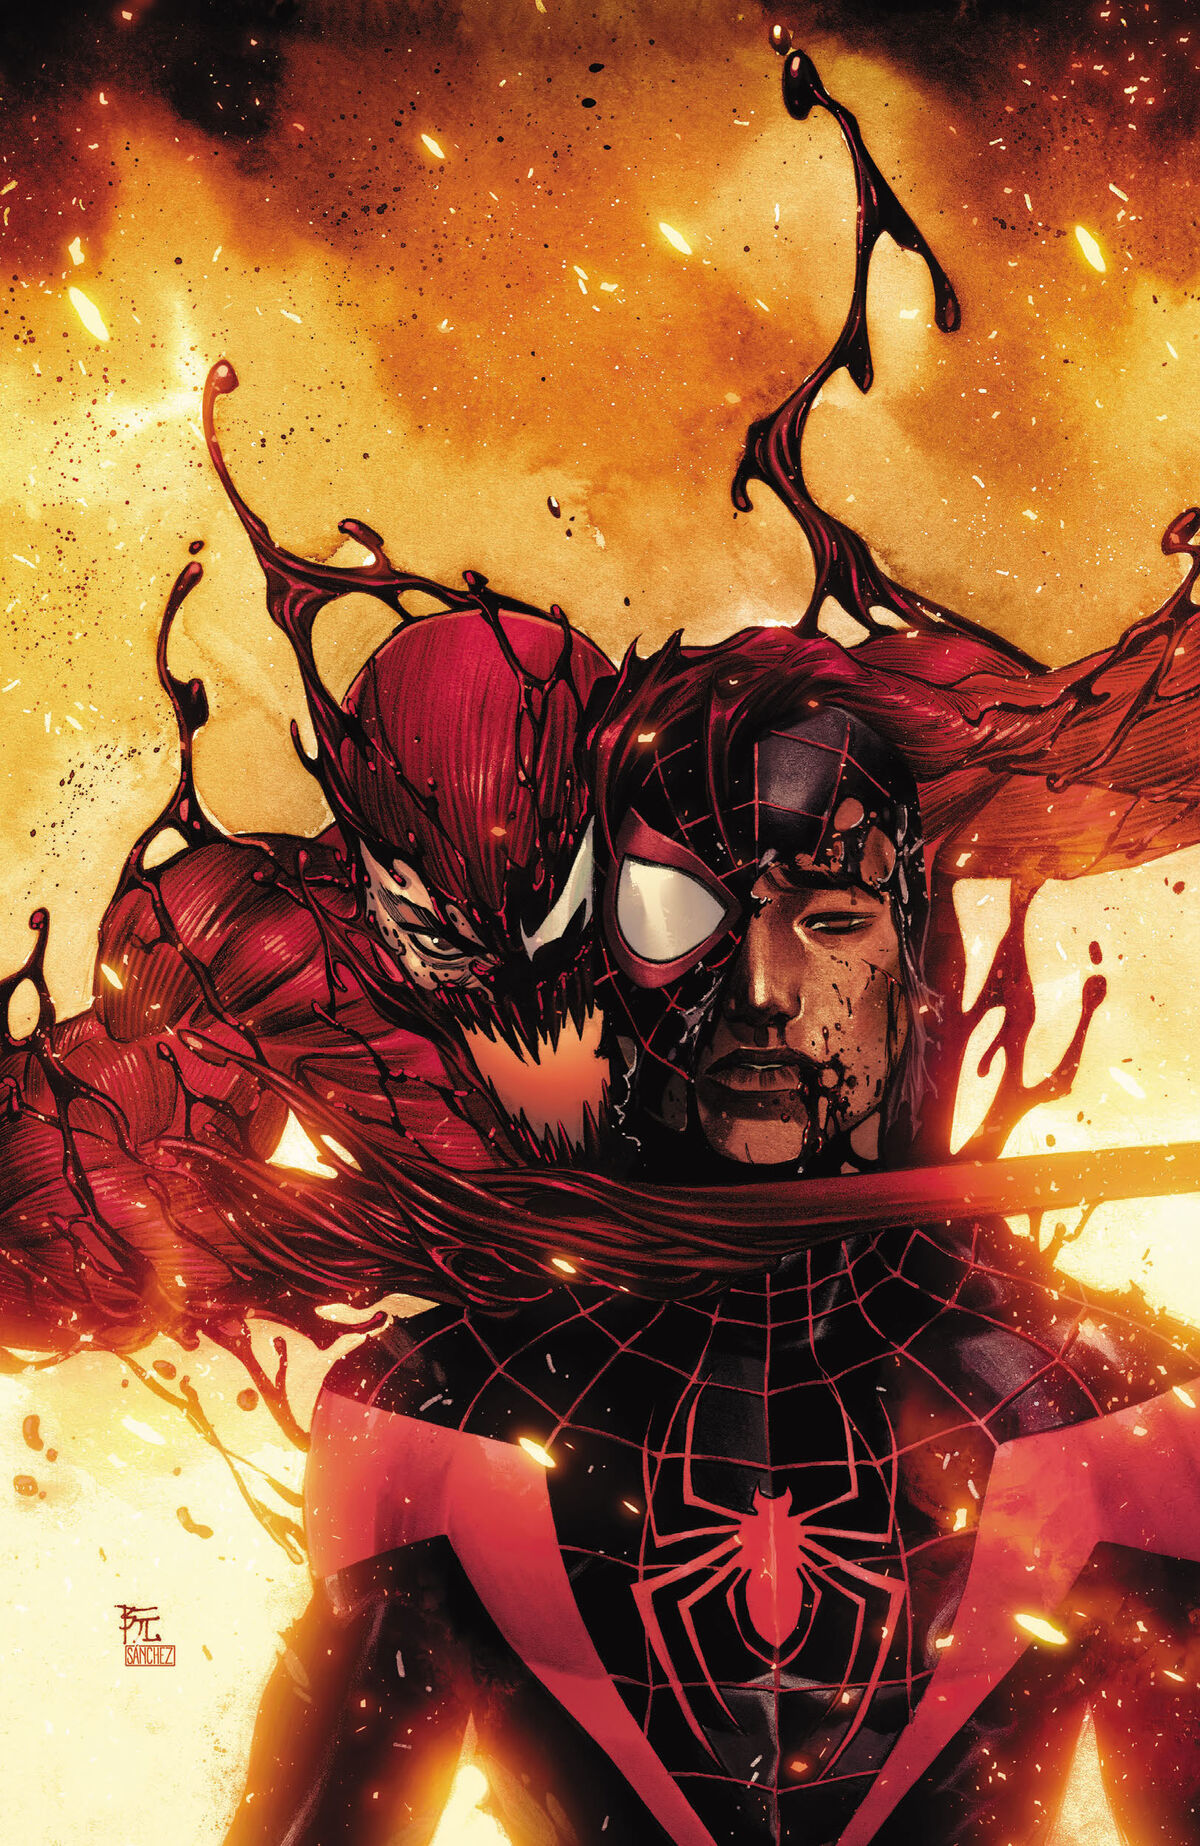 Miles Morales: Spider-Man Vol 2 6 | Marvel Database | Fandom